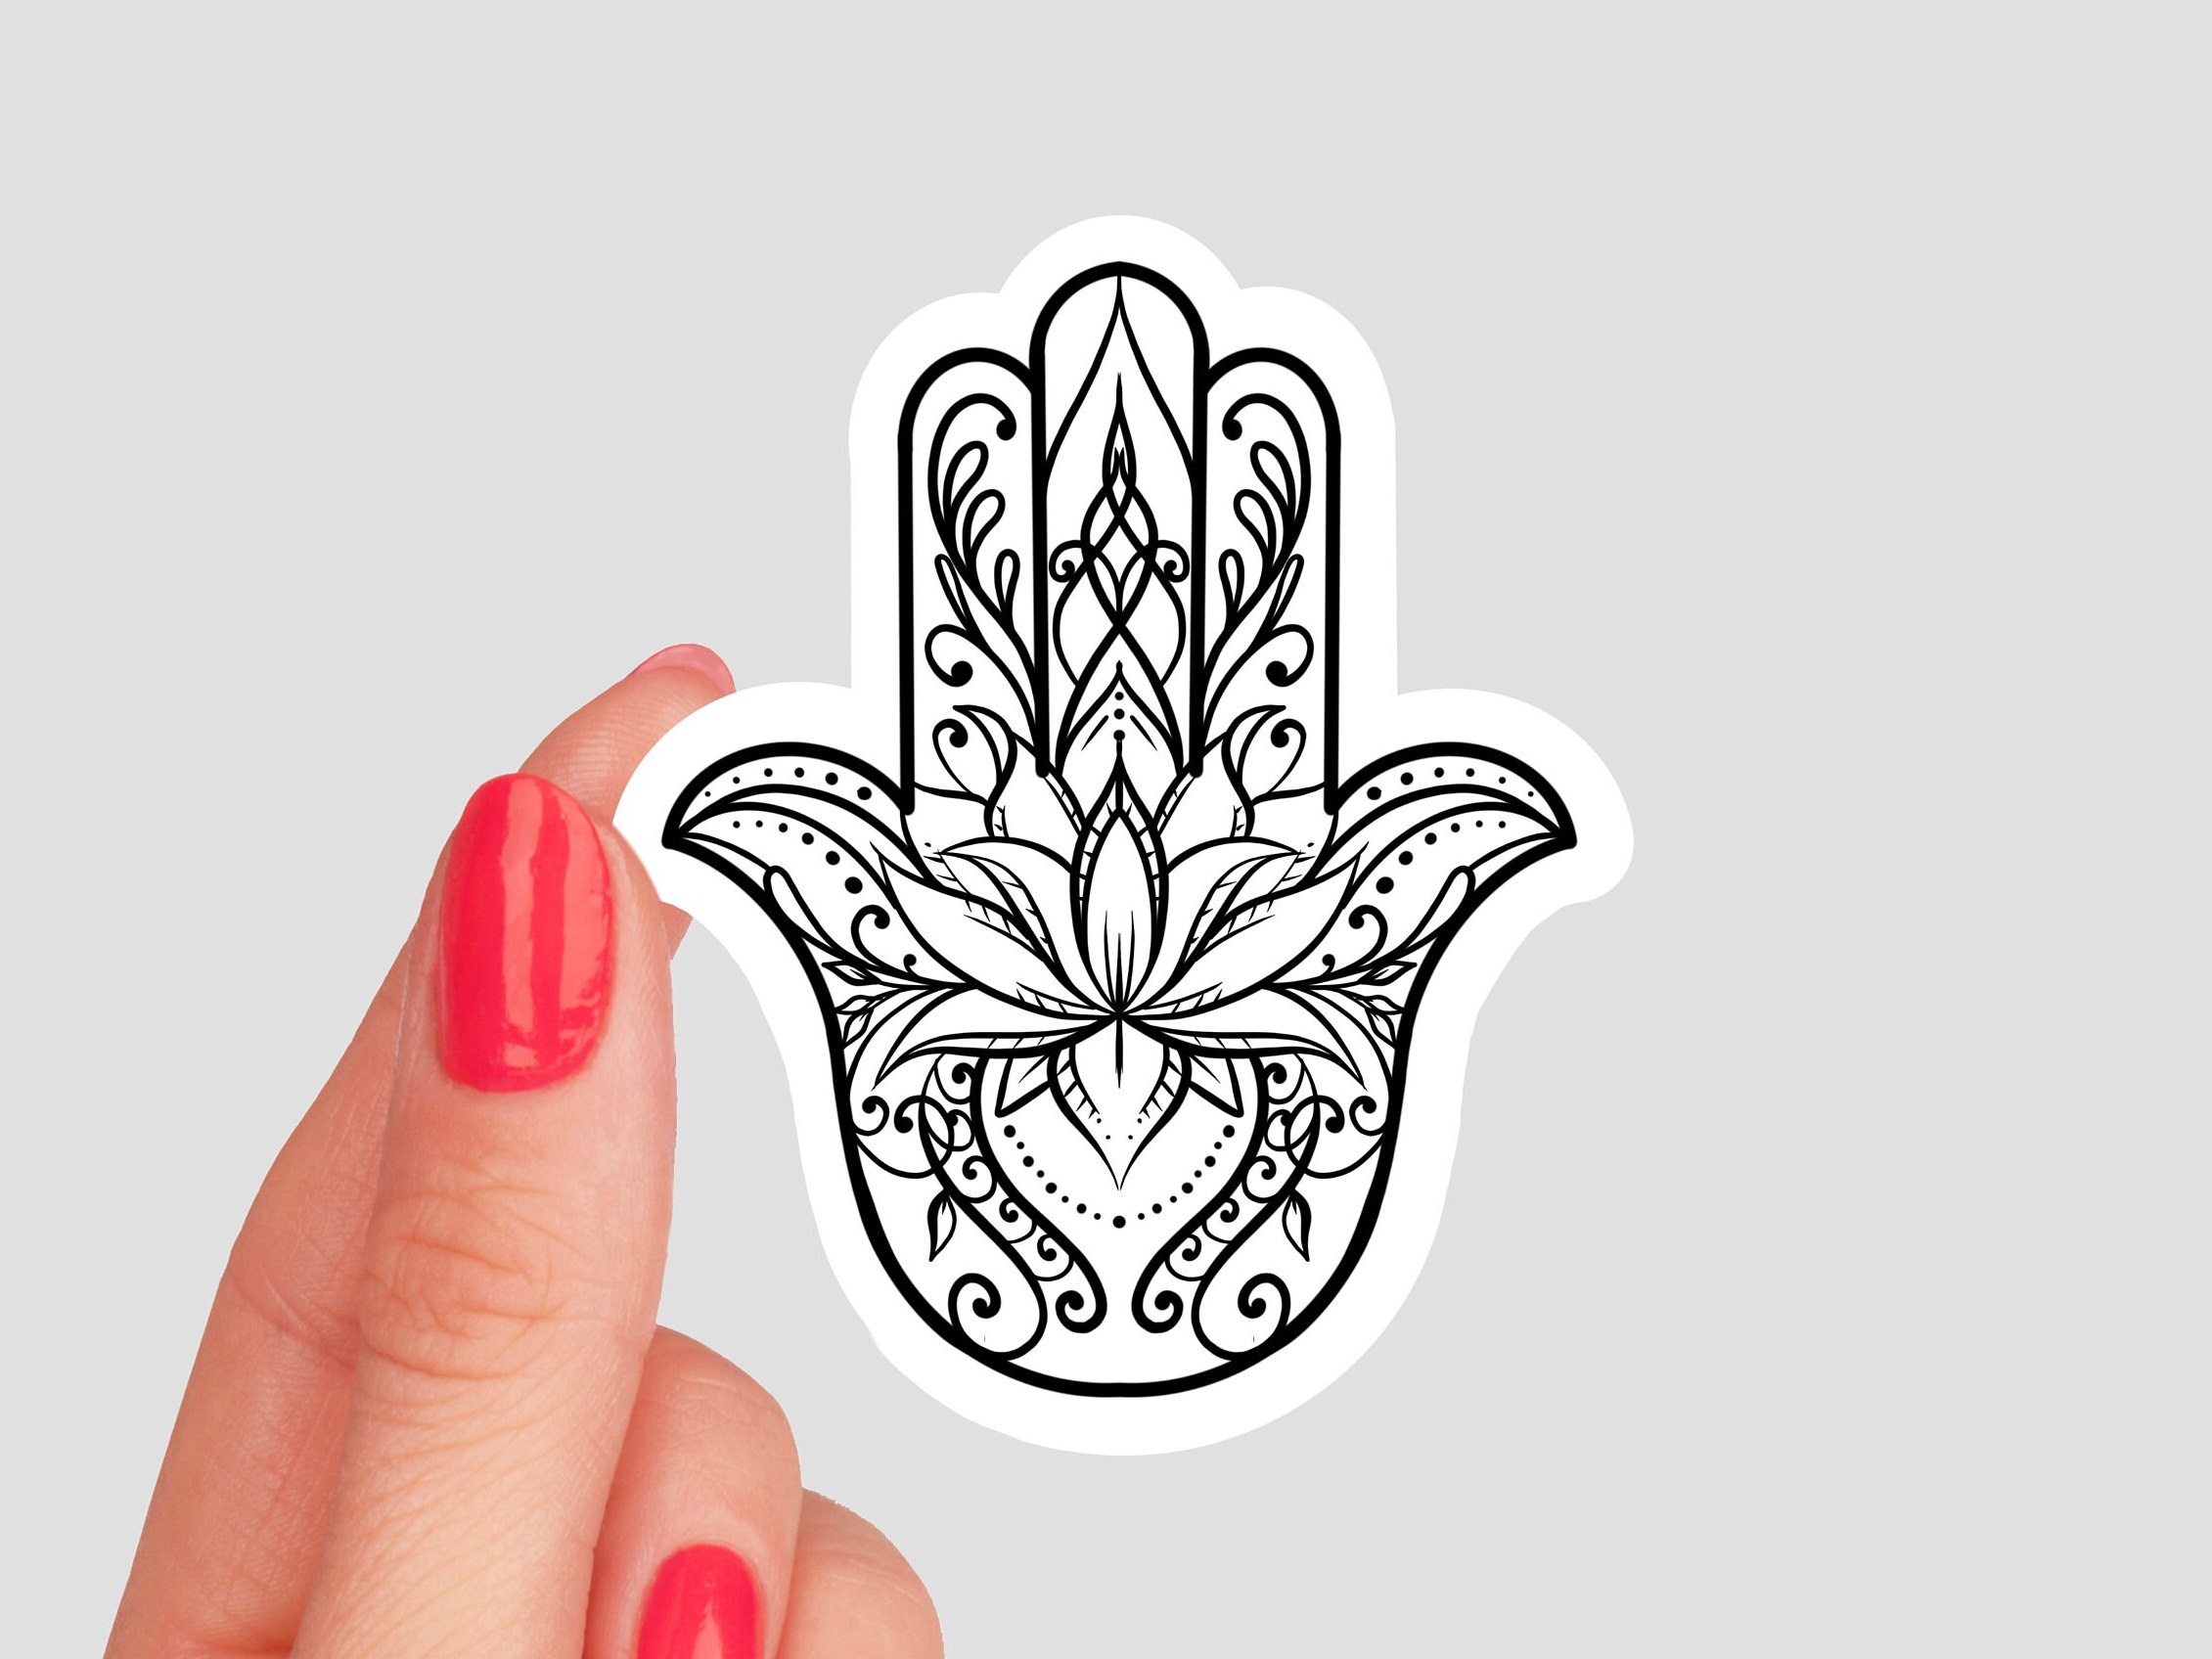 Hamsa Tattoo Projects :: Photos, videos, logos, illustrations and branding  :: Behance